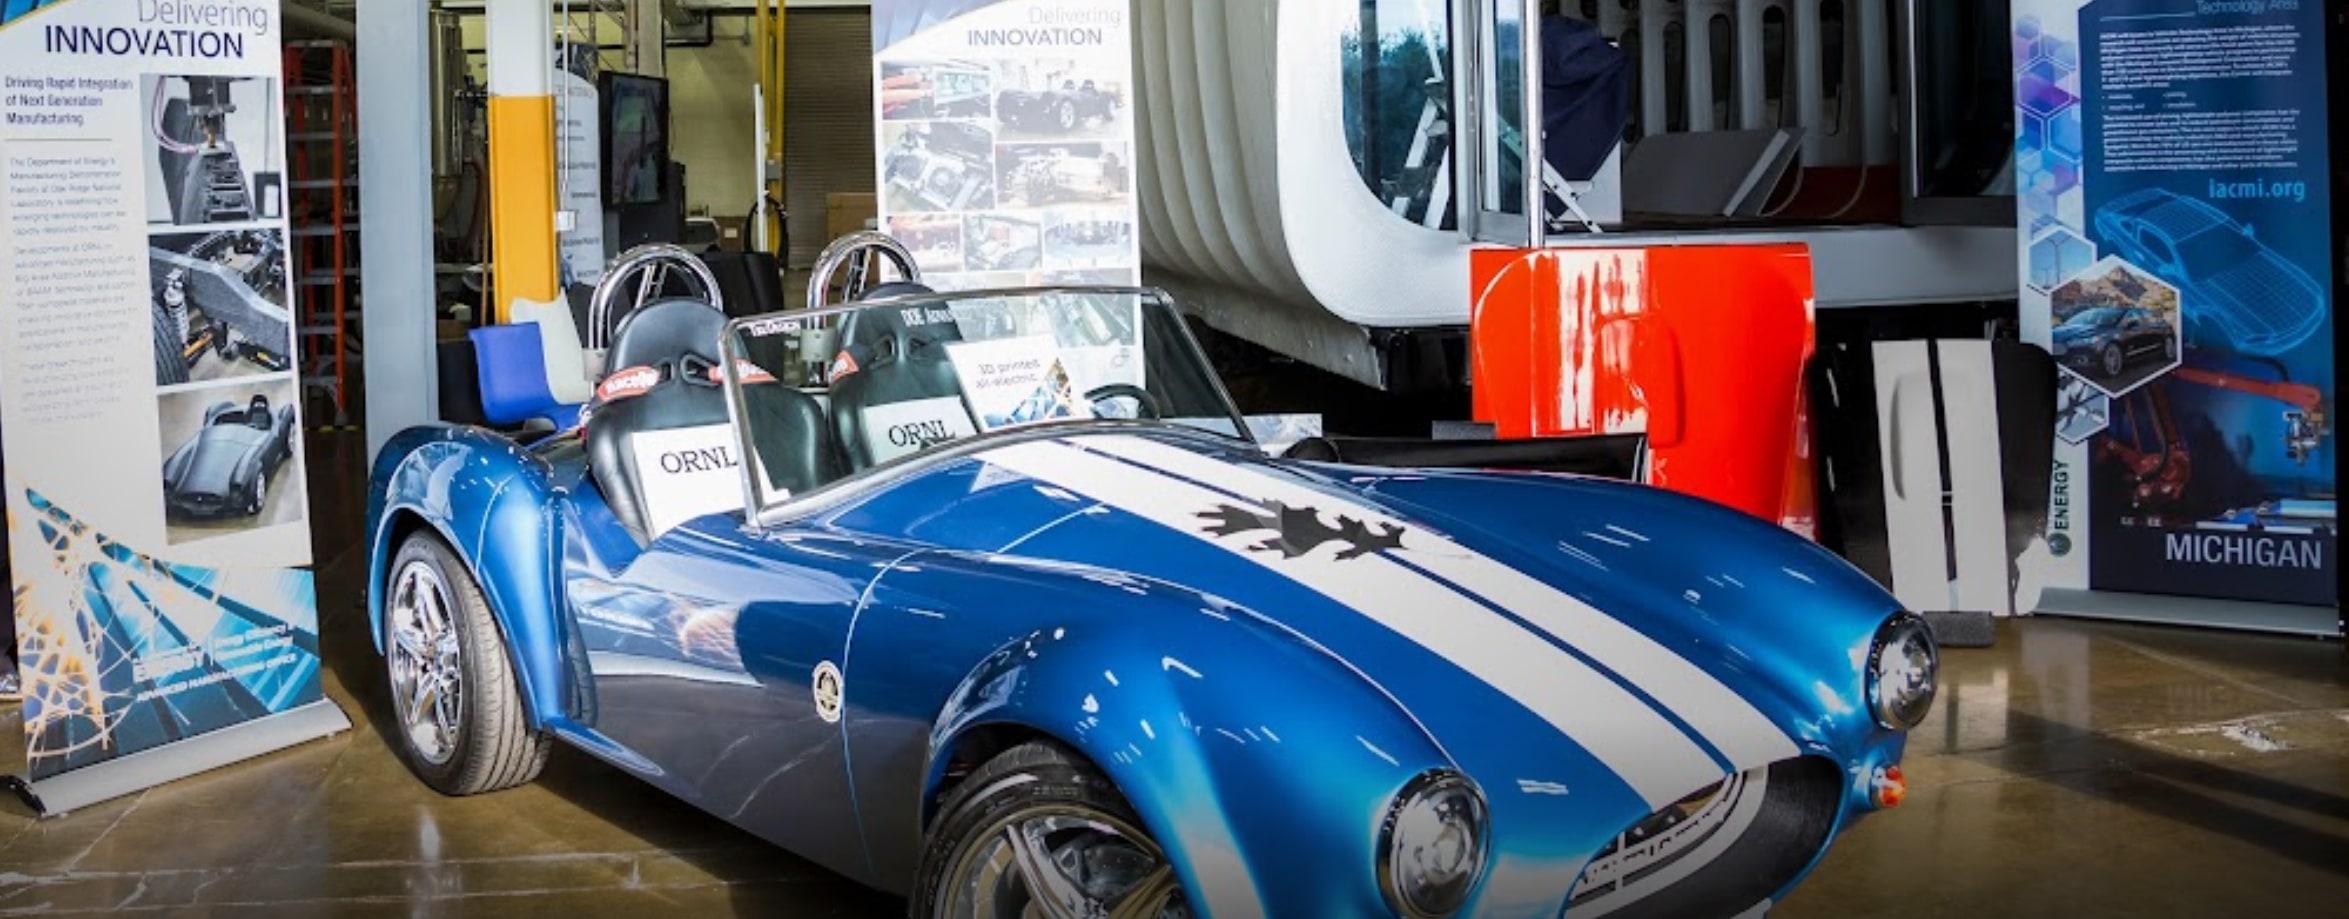 classic car on display